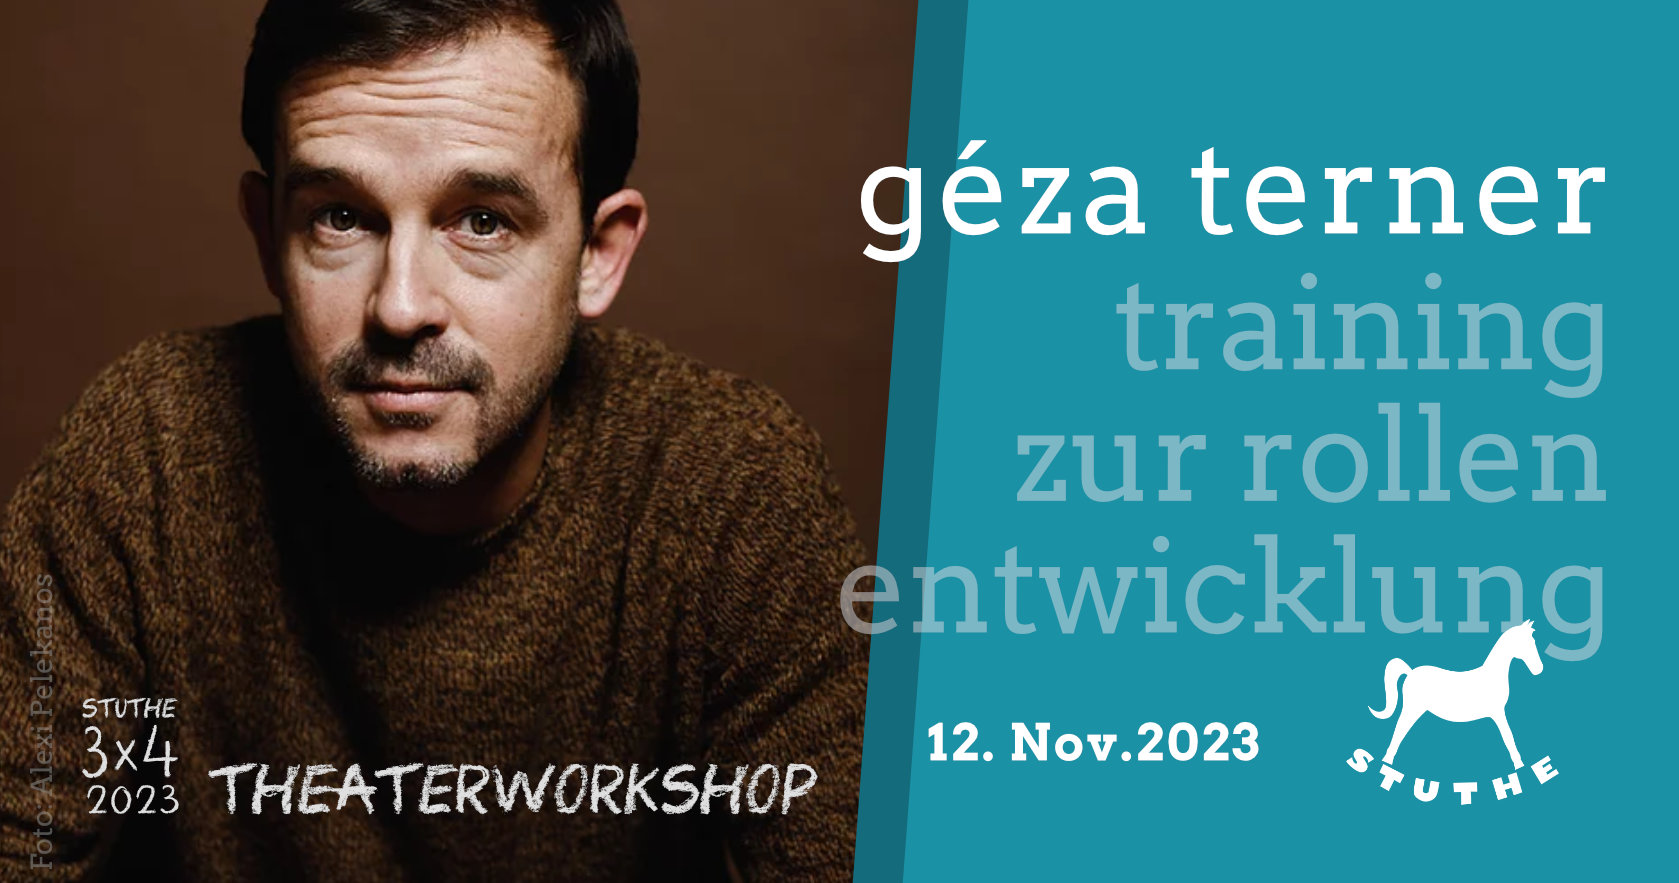 STUTHE Profi-Workshop 2023 mit Géza Terner